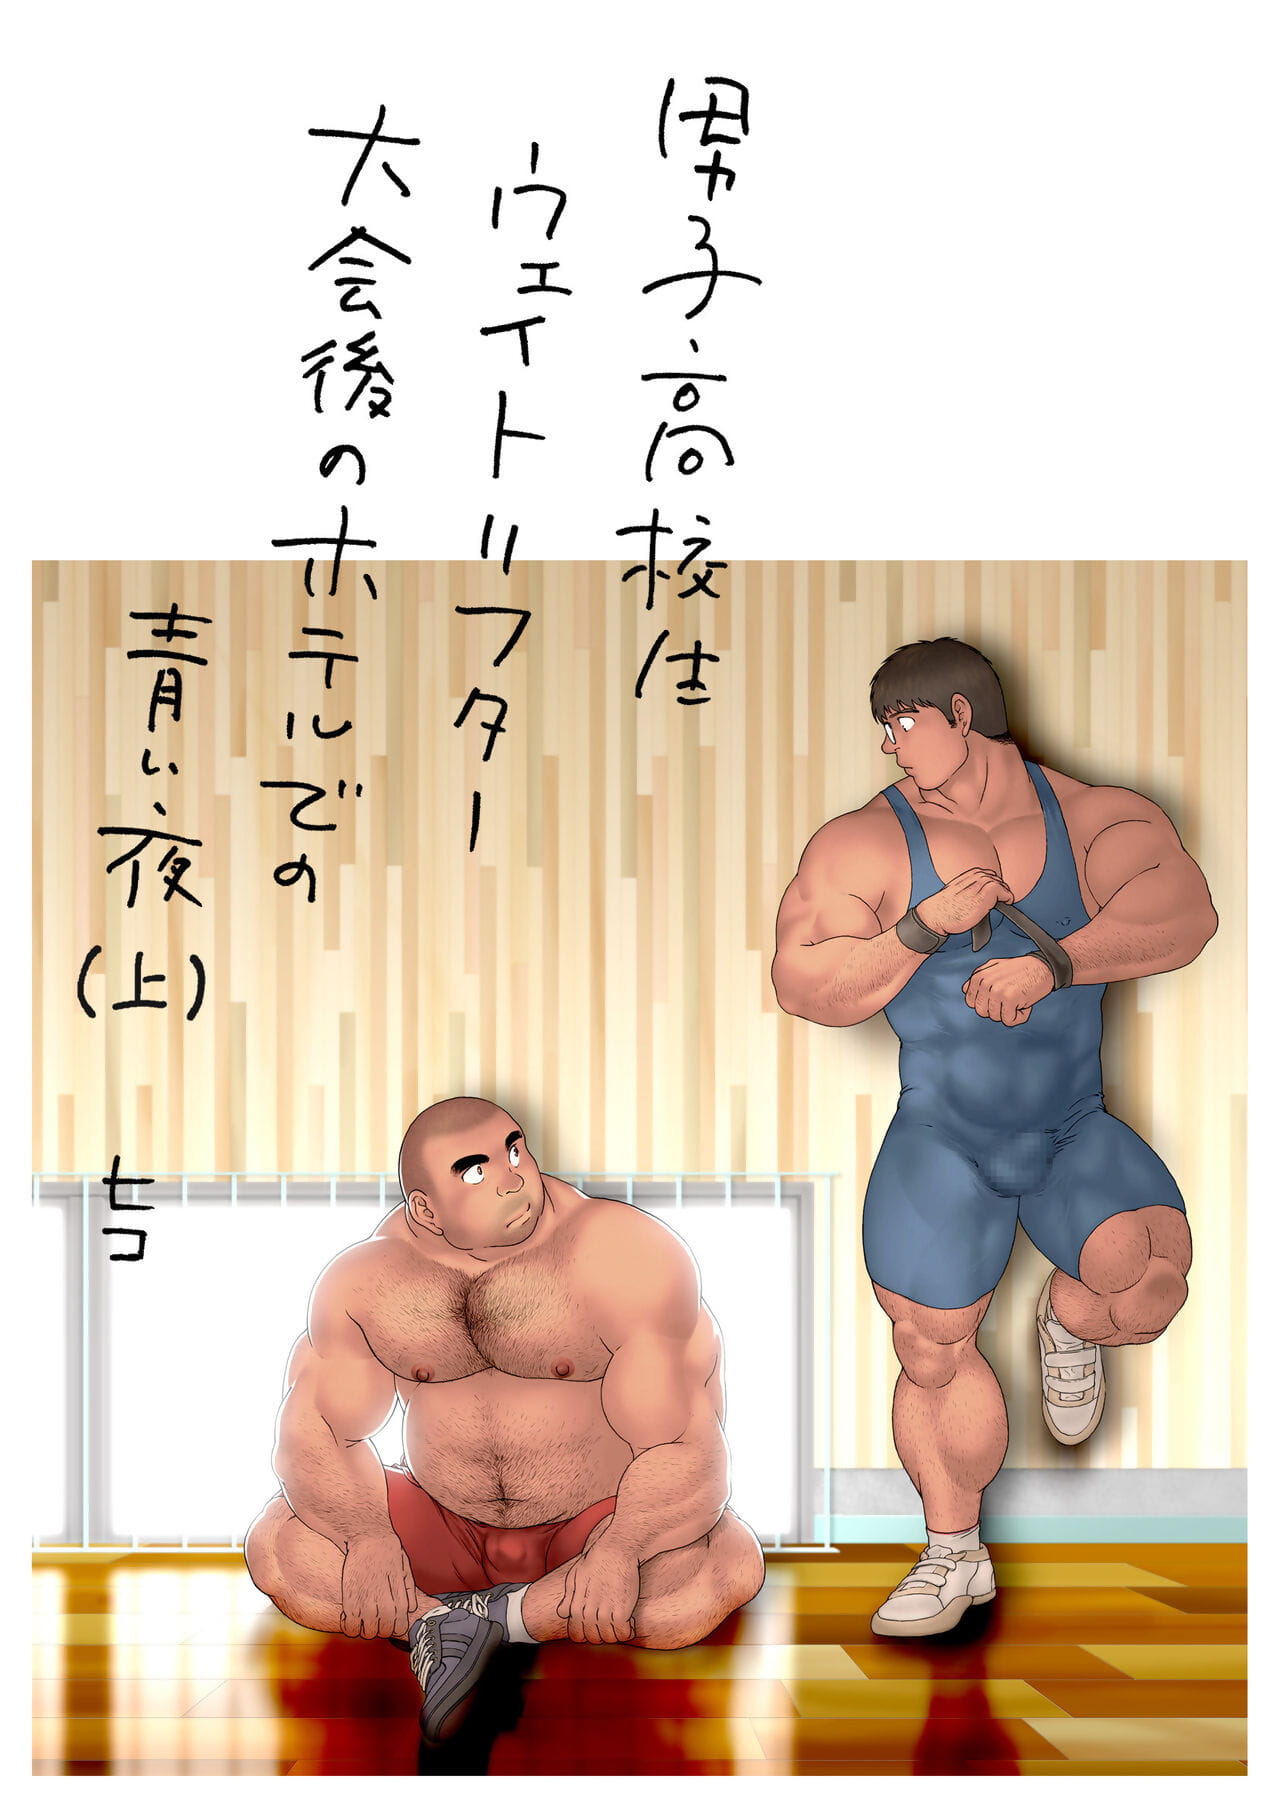 Danshi Koukousei Weightlifter Taikai-go no Hotel de no Aoi Yoru page 1